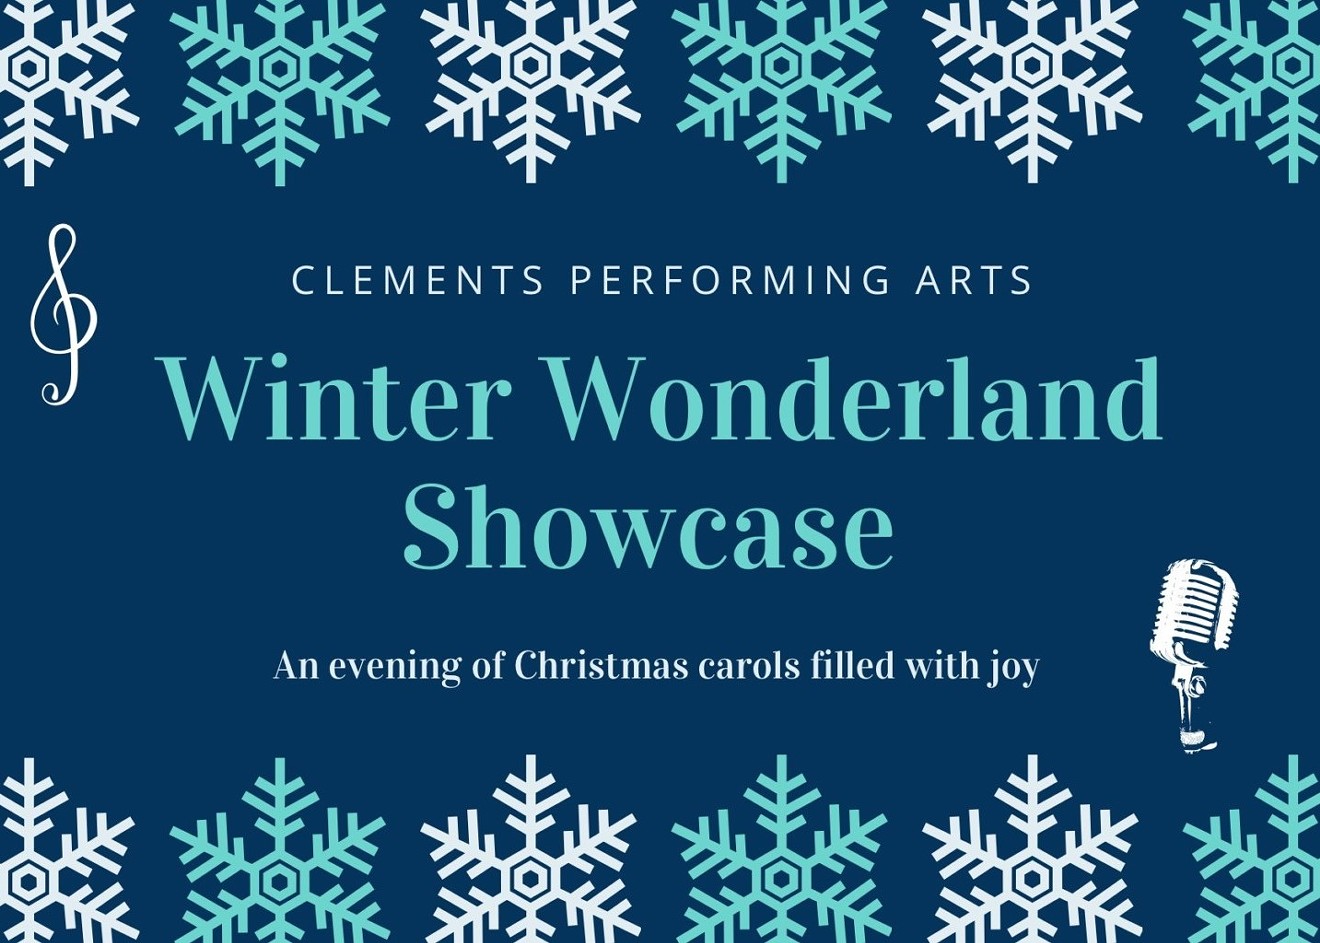 slts_clements_performing_arts_winter_wonderland_showcase.jpg